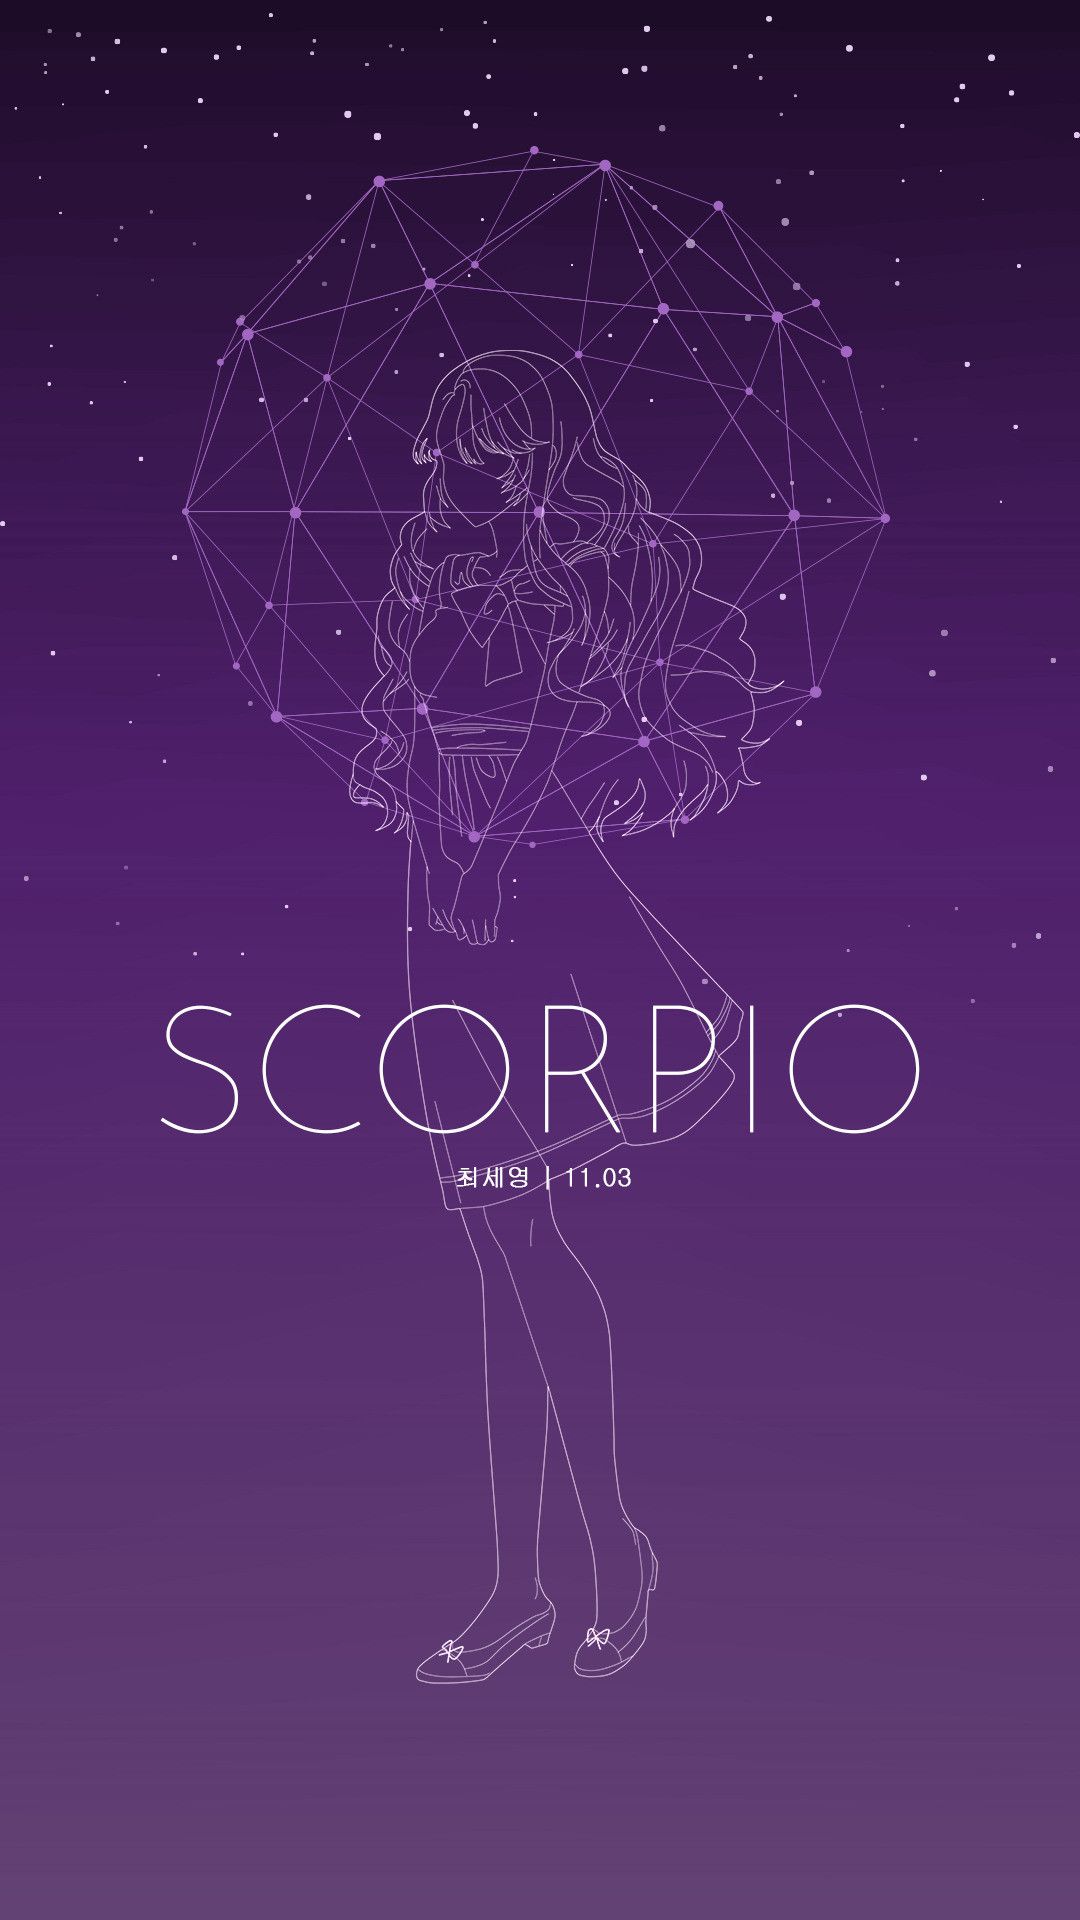 Jo on Twitter iPhone wallpaper Im a Scorpio kind of mood Scorpio  scorpiogirl Scorpion wallpaper aesthetic aestheticmood blue  httpstcoZKyA5iwSoV  Twitter